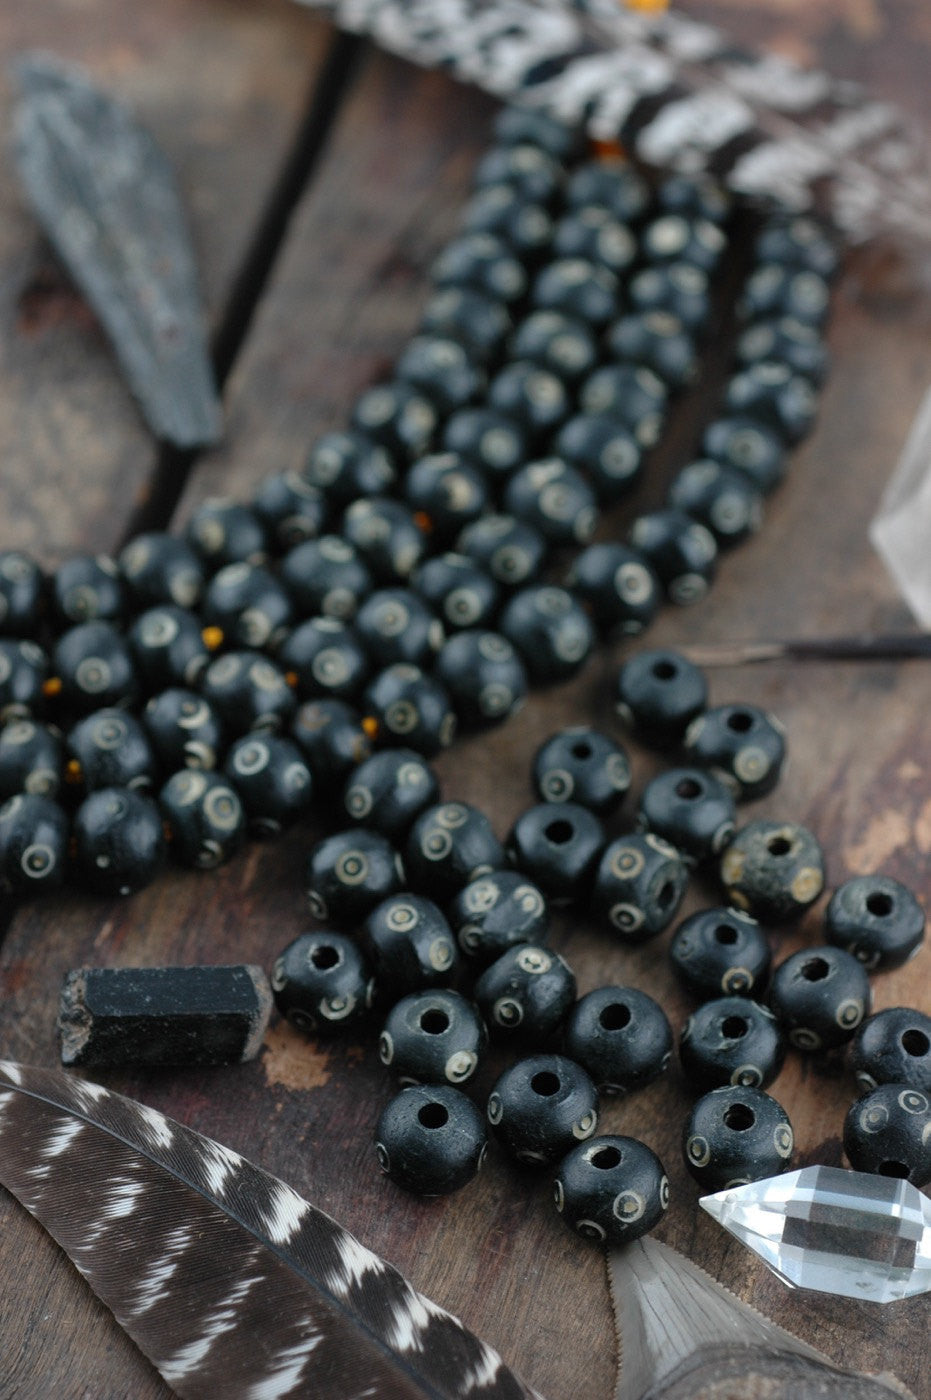 Dot in Circle: Black, White Bone Beads, 8x10mm, 24 pieces - ShopWomanShopsWorld.com. Bone Beads, Tassels, Pom Poms, African Beads.